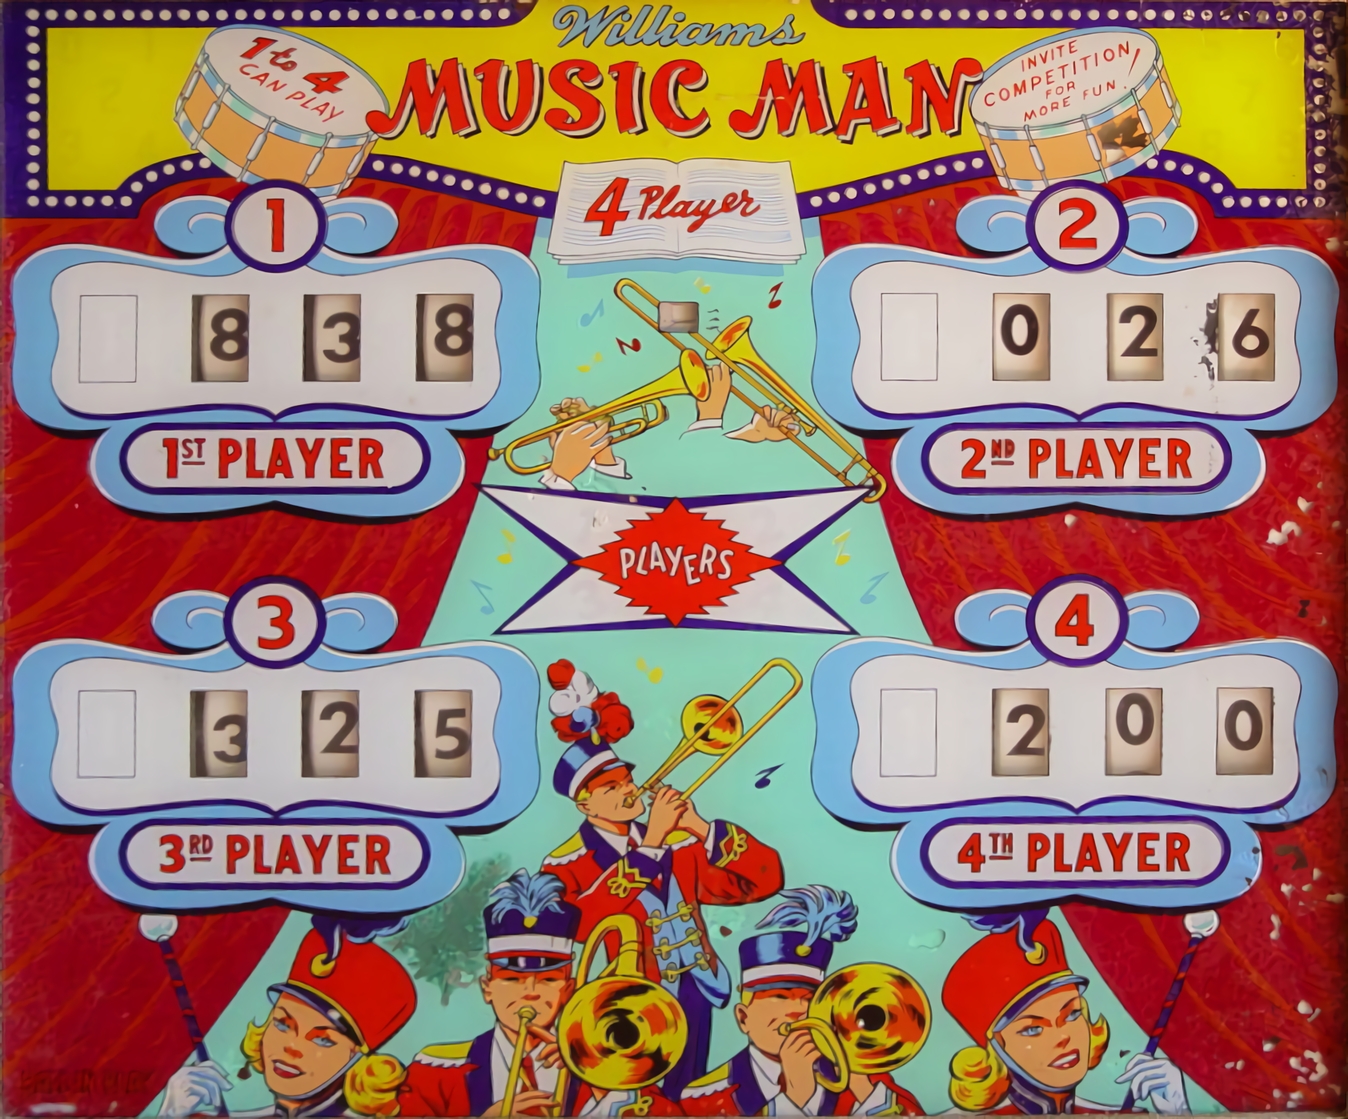 Music Man (Williams, 1960)